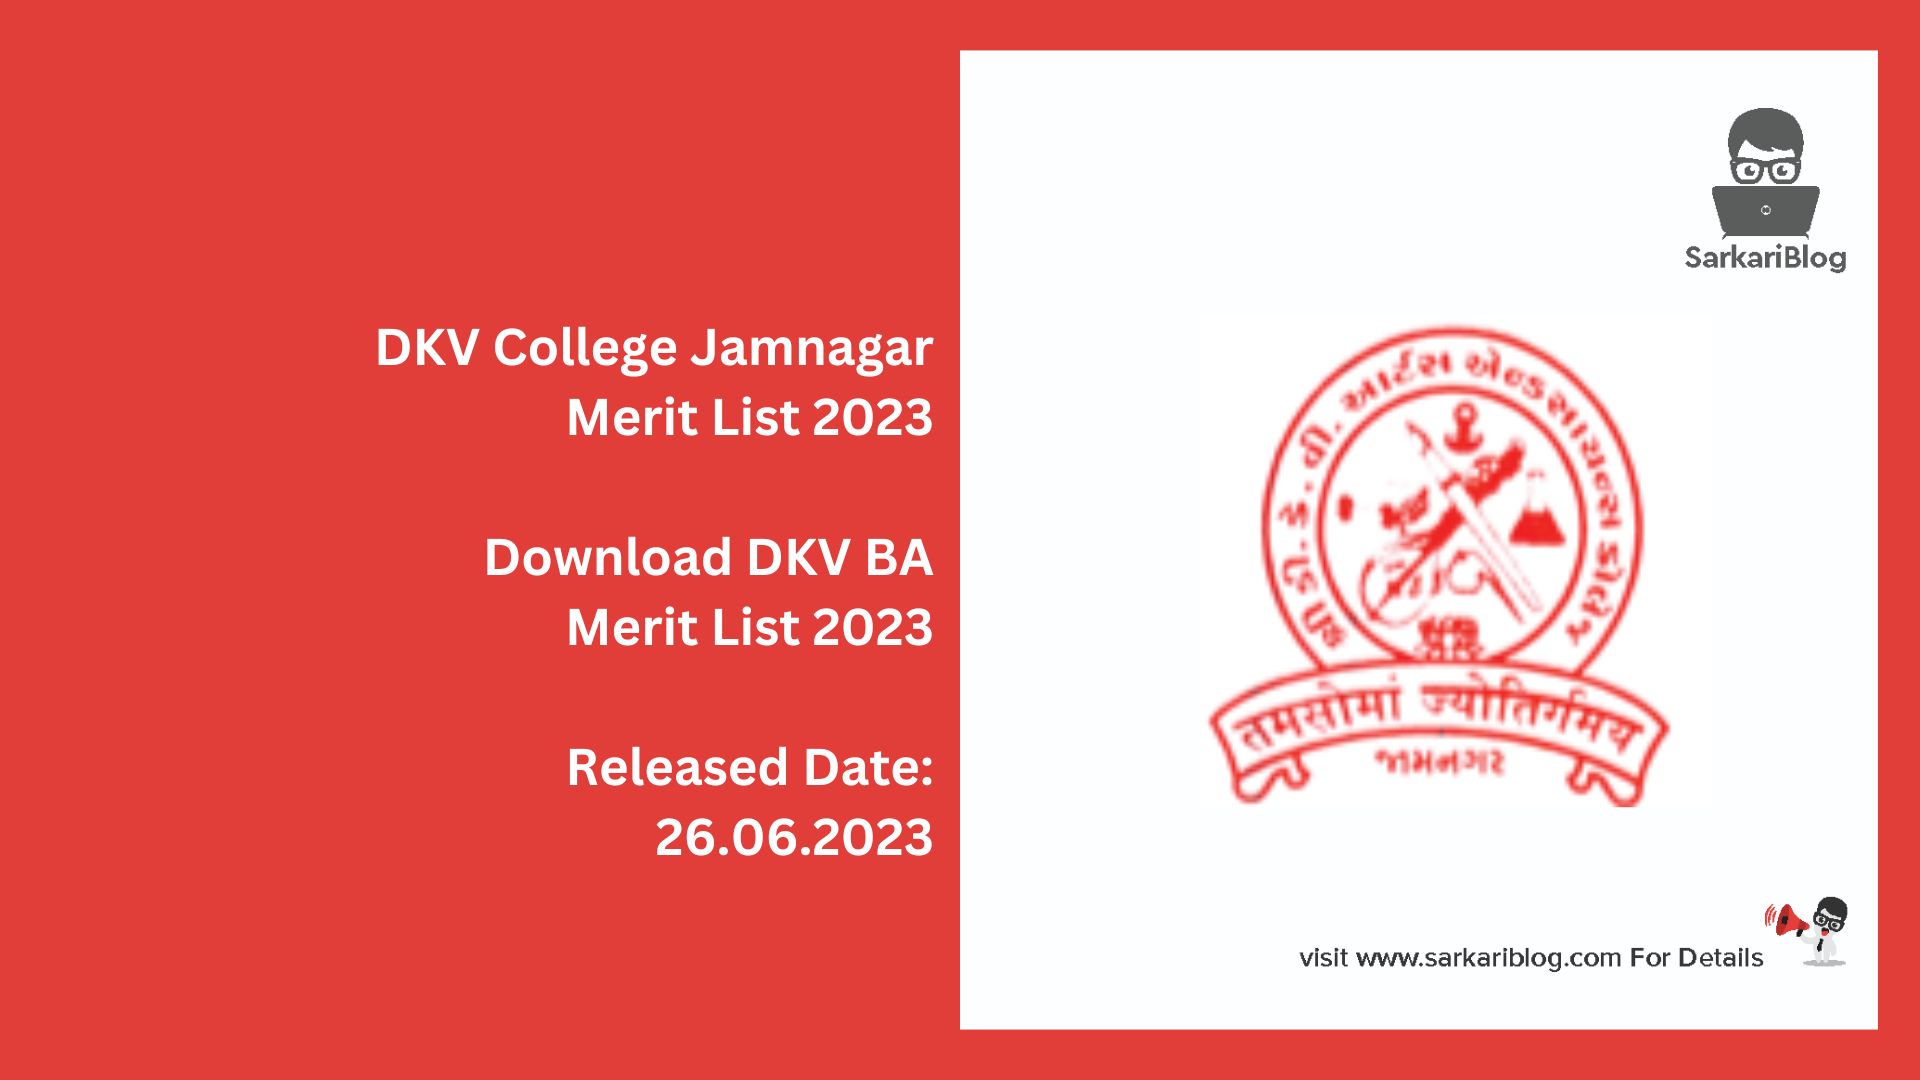 DKV College Jamnagar Merit List 2023